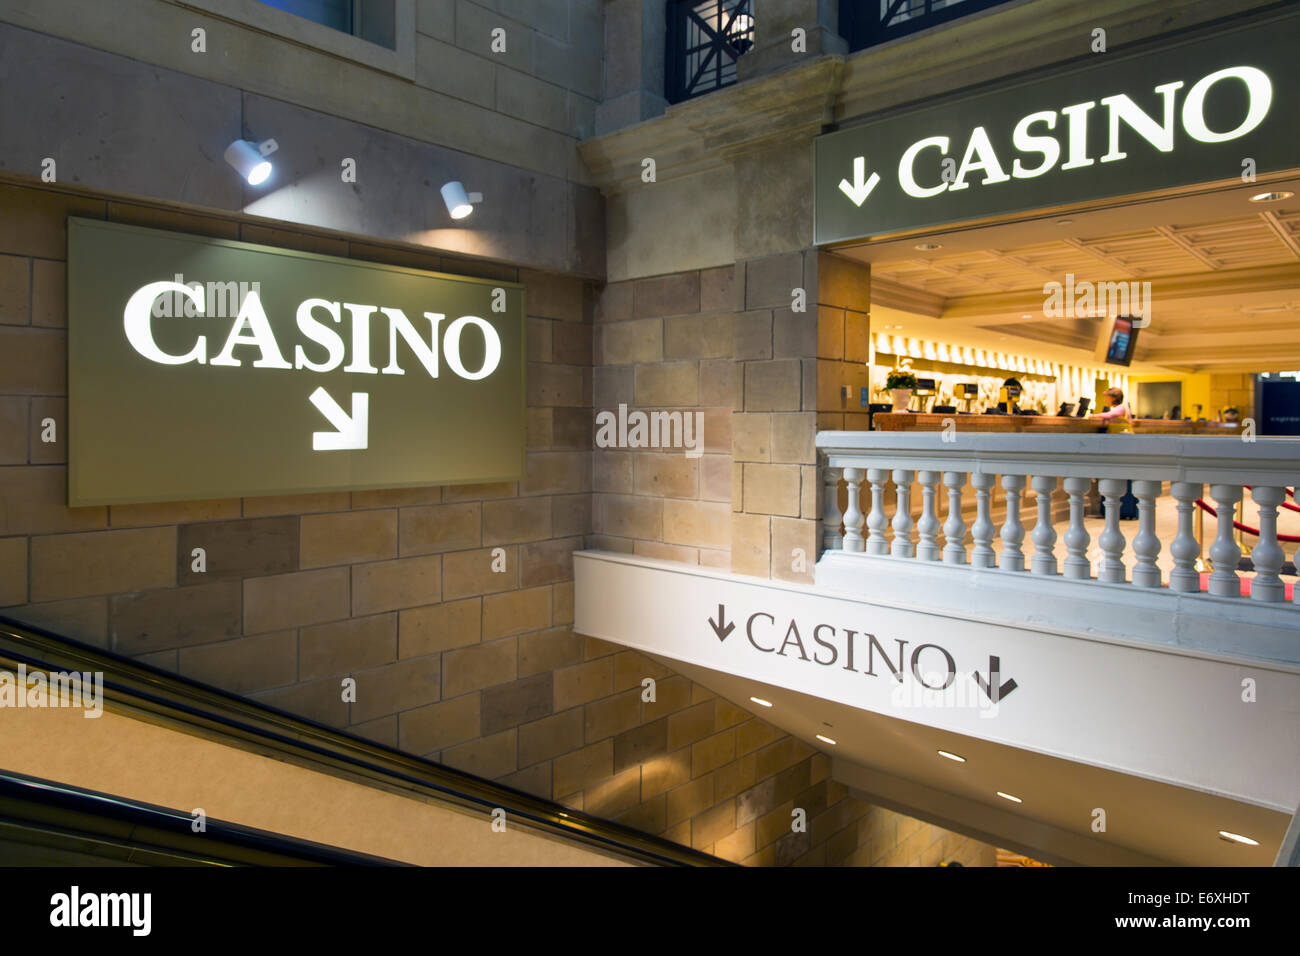 USA,New Jersey,Atlantic City, Caesars Casino, Casino signs Stock Photo